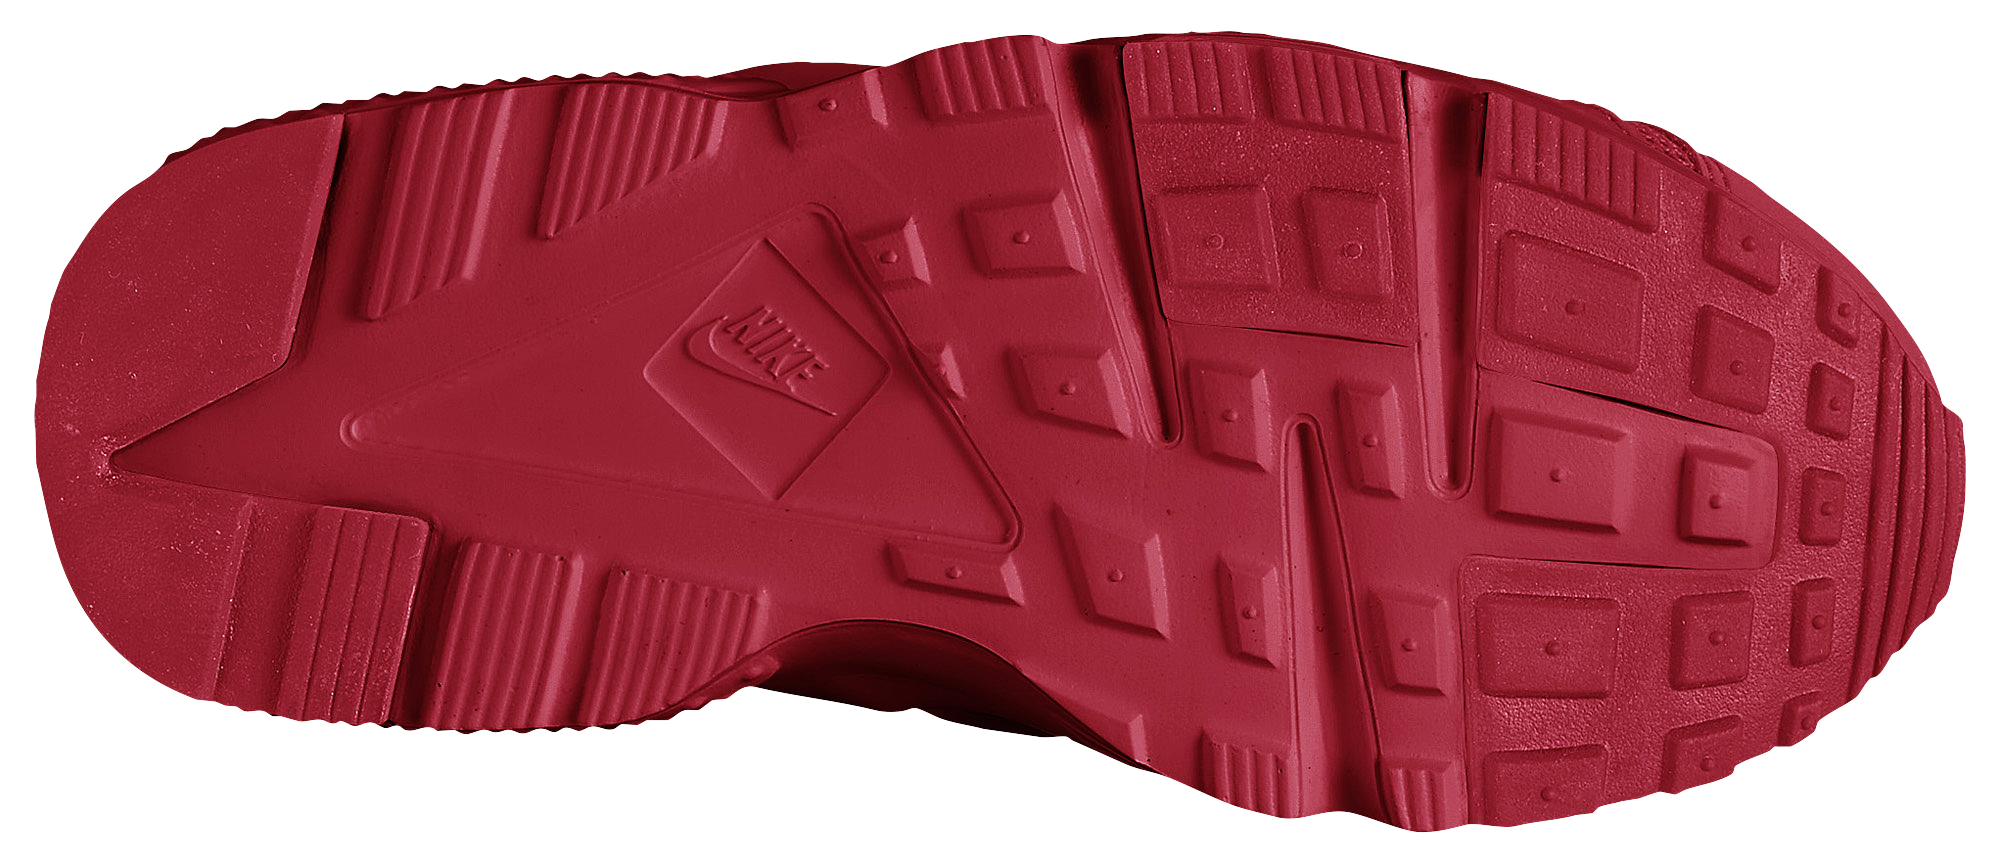 red huaraches foot locker